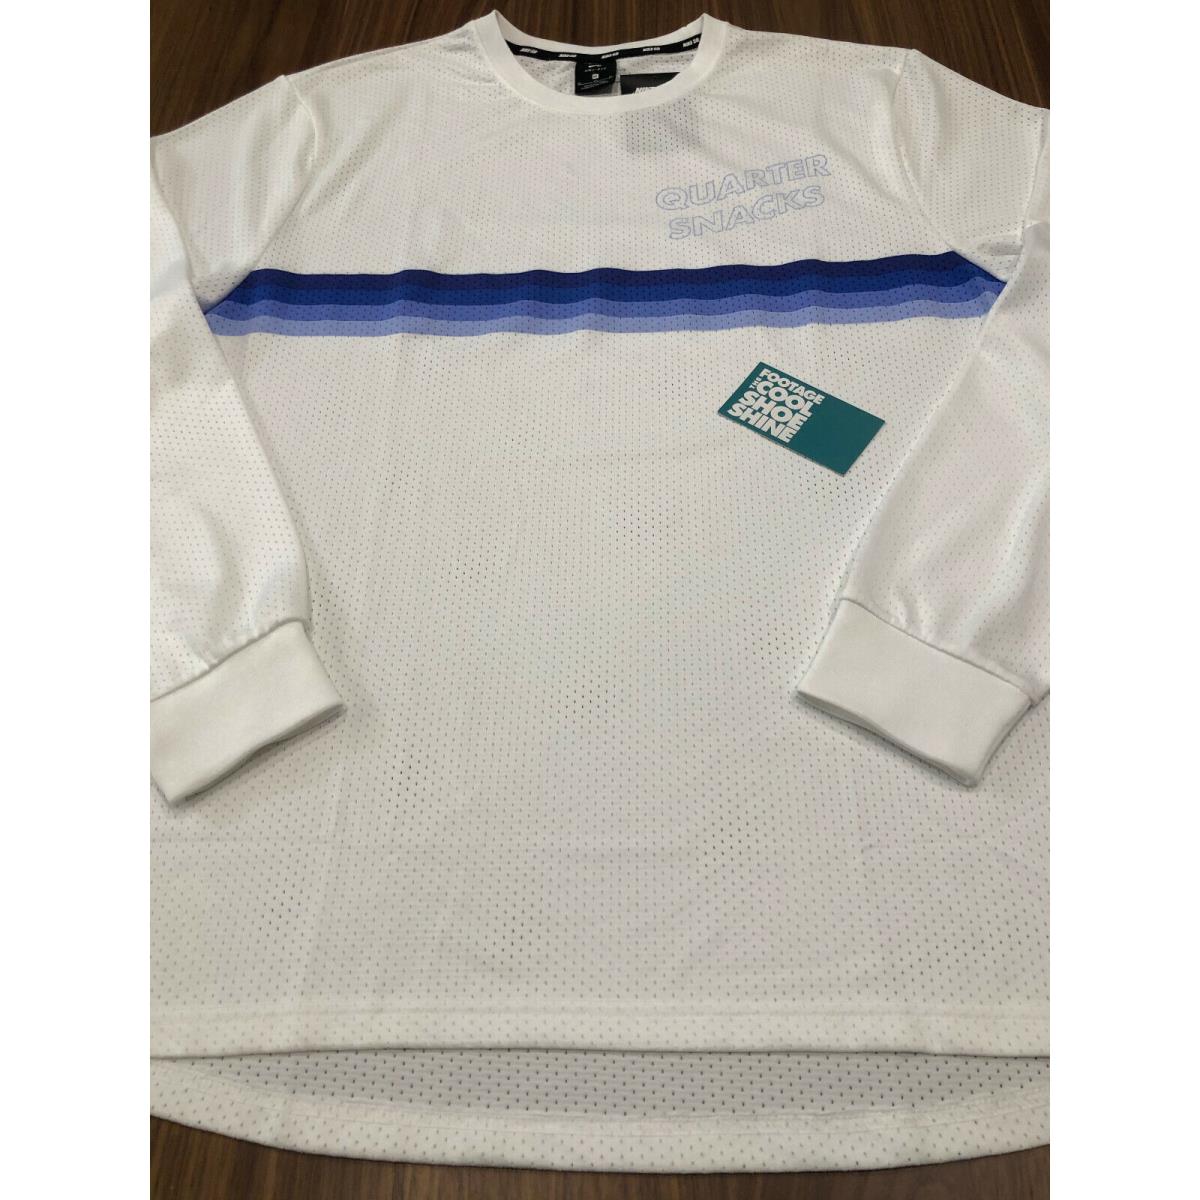 Nike Dunk SB Quartersnacks Dry Fit Long Sleeve Mesh Top Shirt Supreme White XL